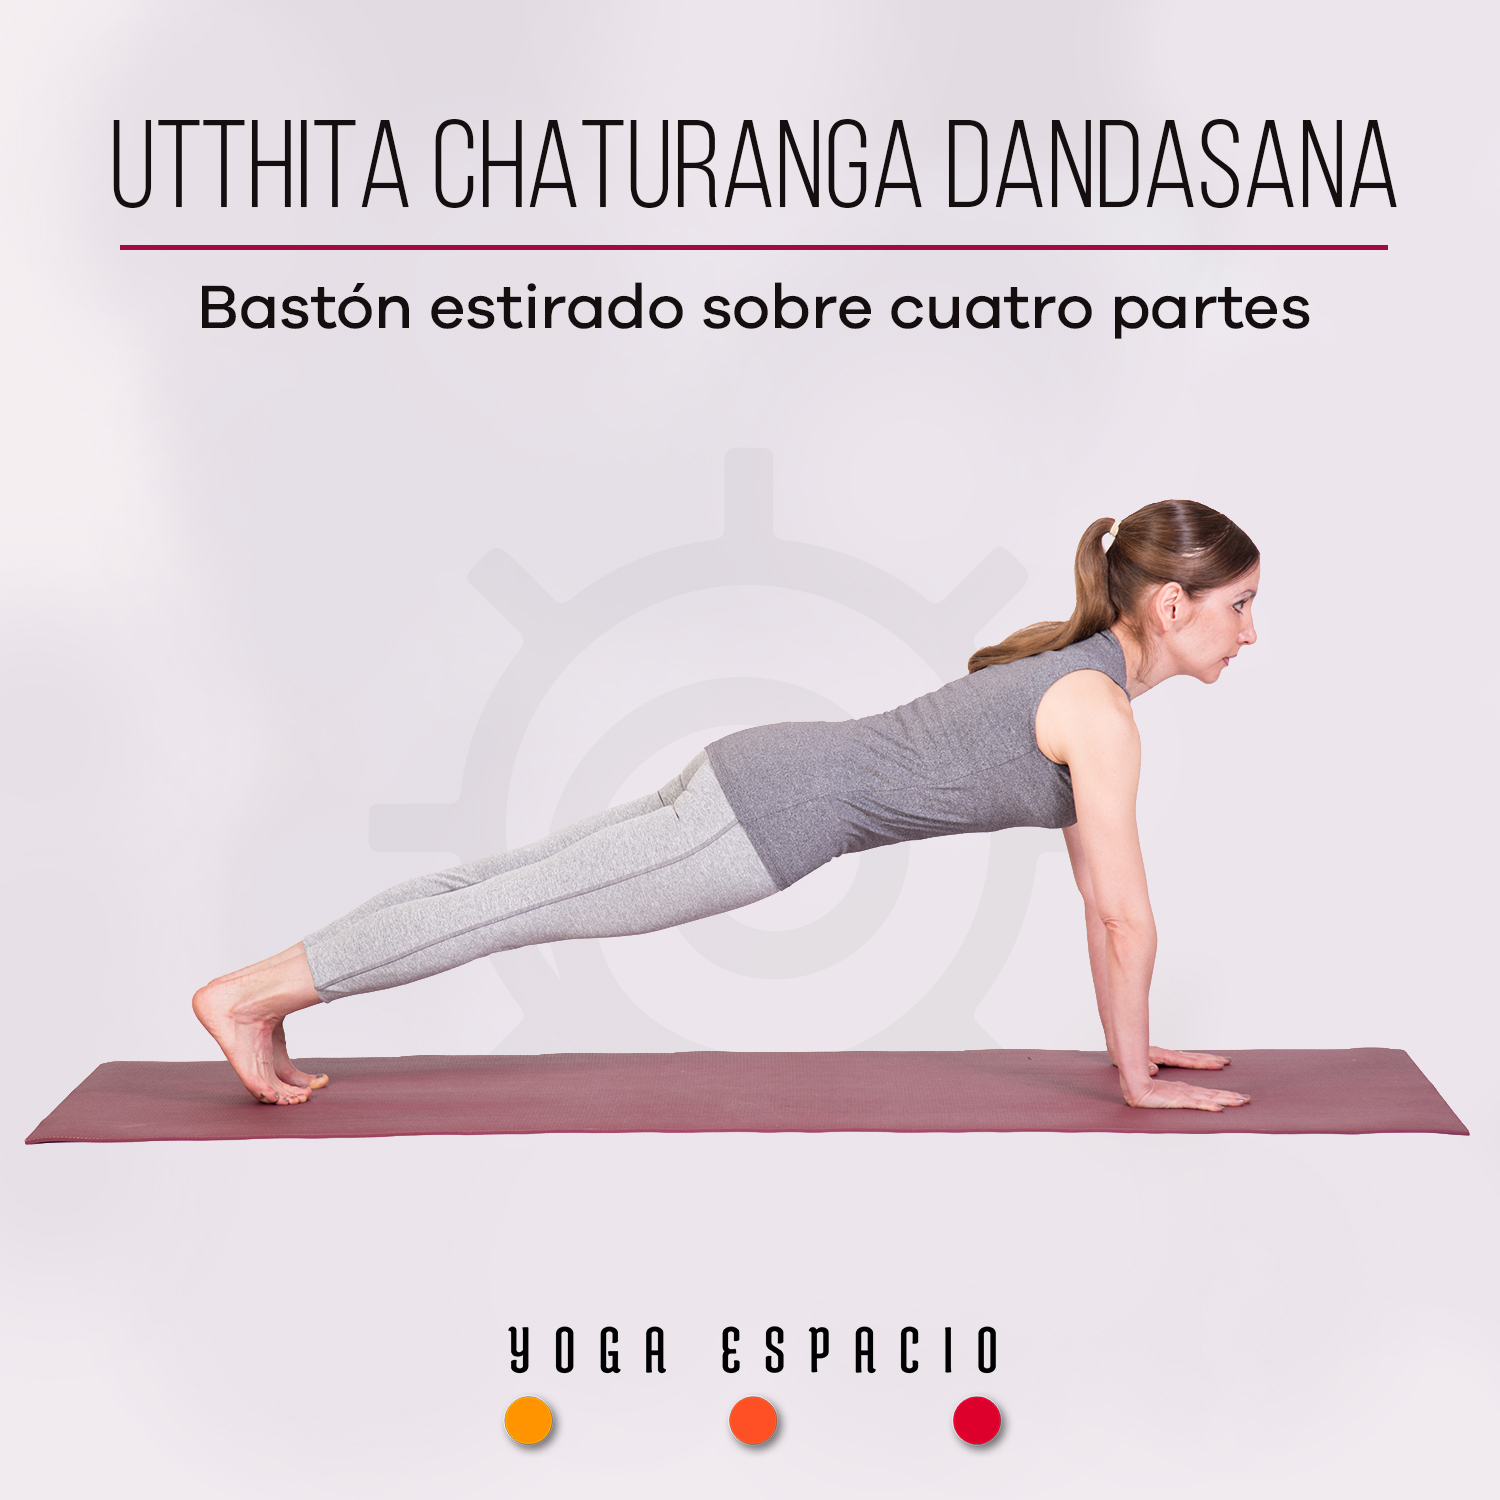 COMP] Chaturanga Dandasana. : r/yoga